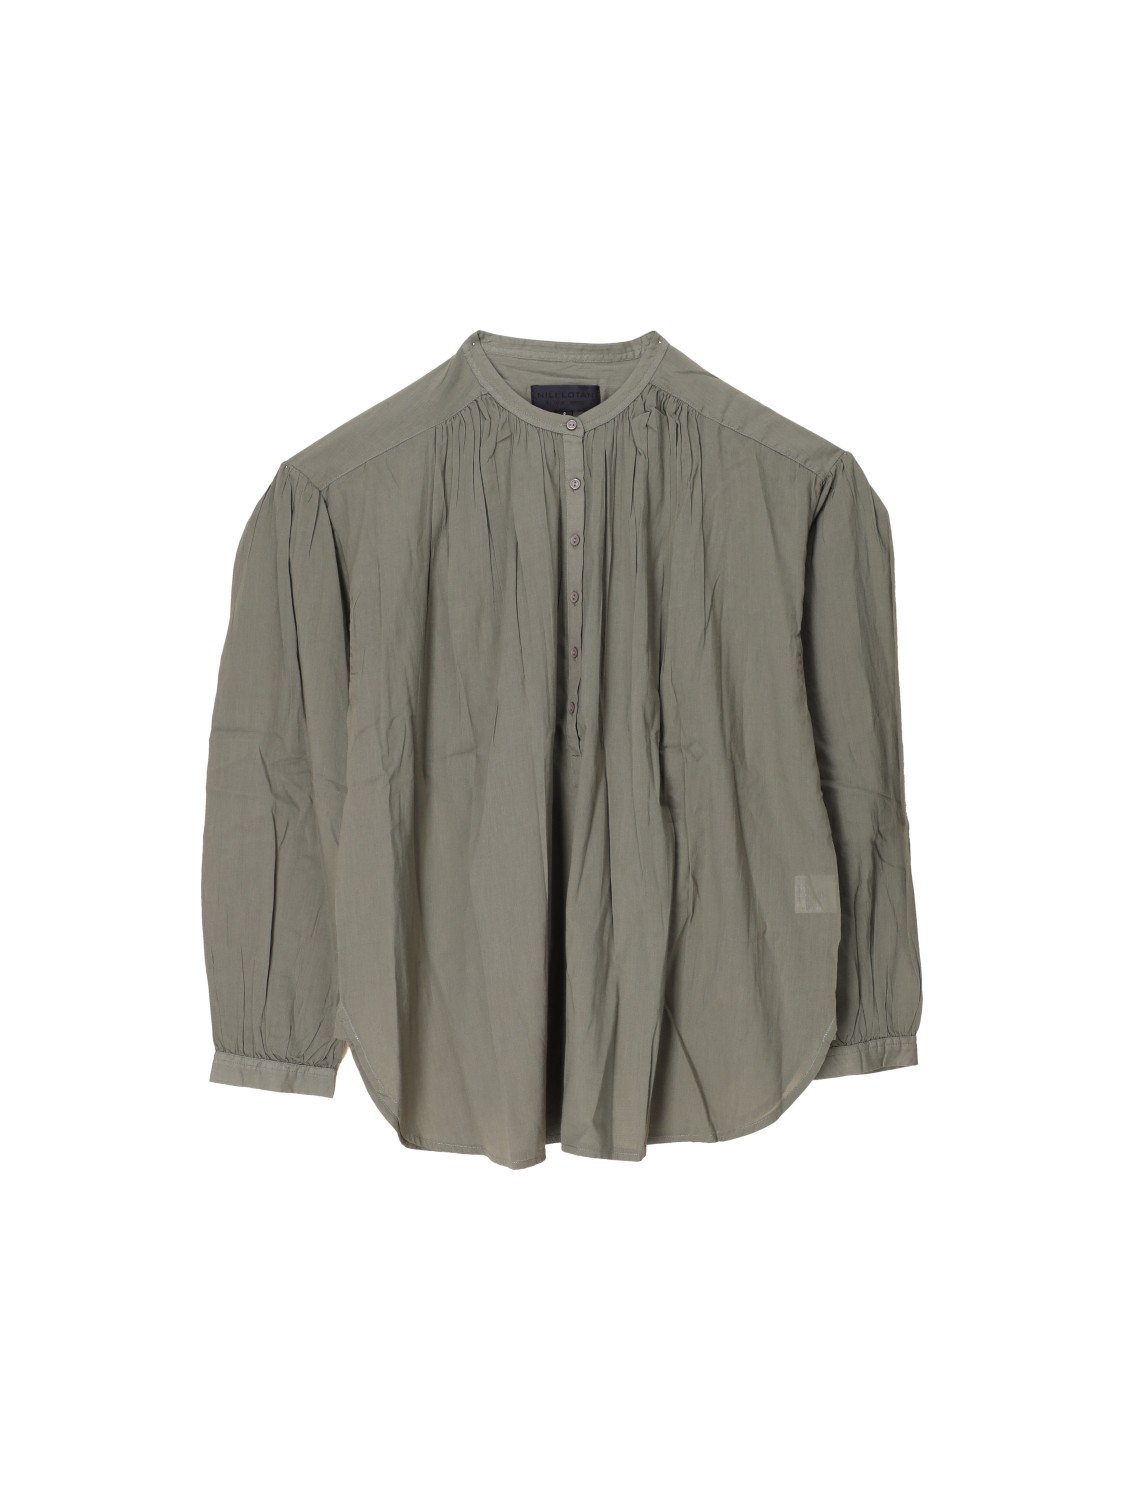 Nili Lotan Neville cotton voile sweater blouse  khaki S